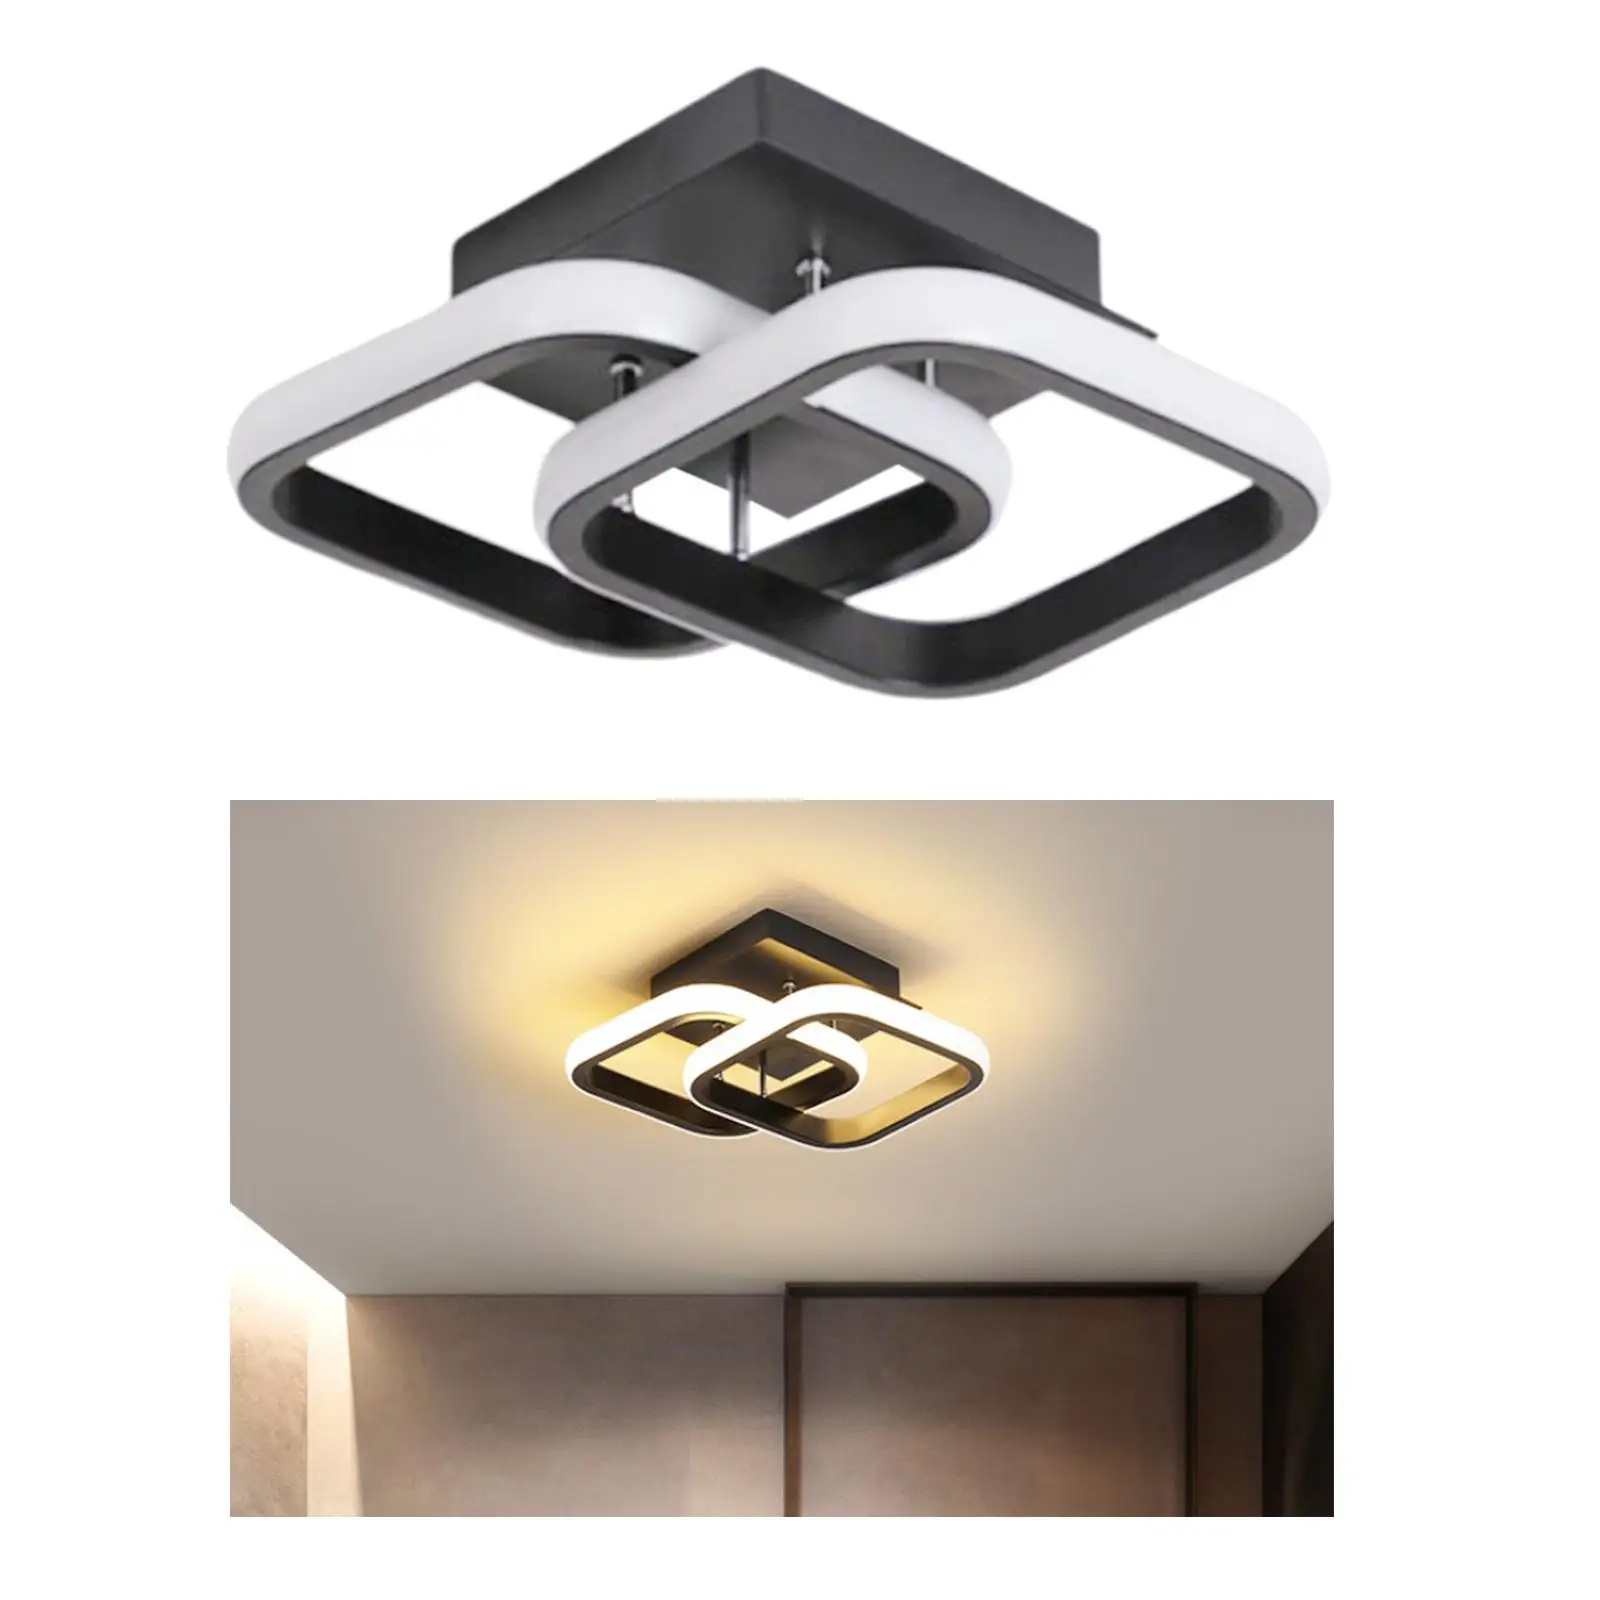 LED Ceiling Lamp For Corridor Modern Lighting Fixtures for Hallway Balcony Home Bedroom Hallway Decoration Light Fixture